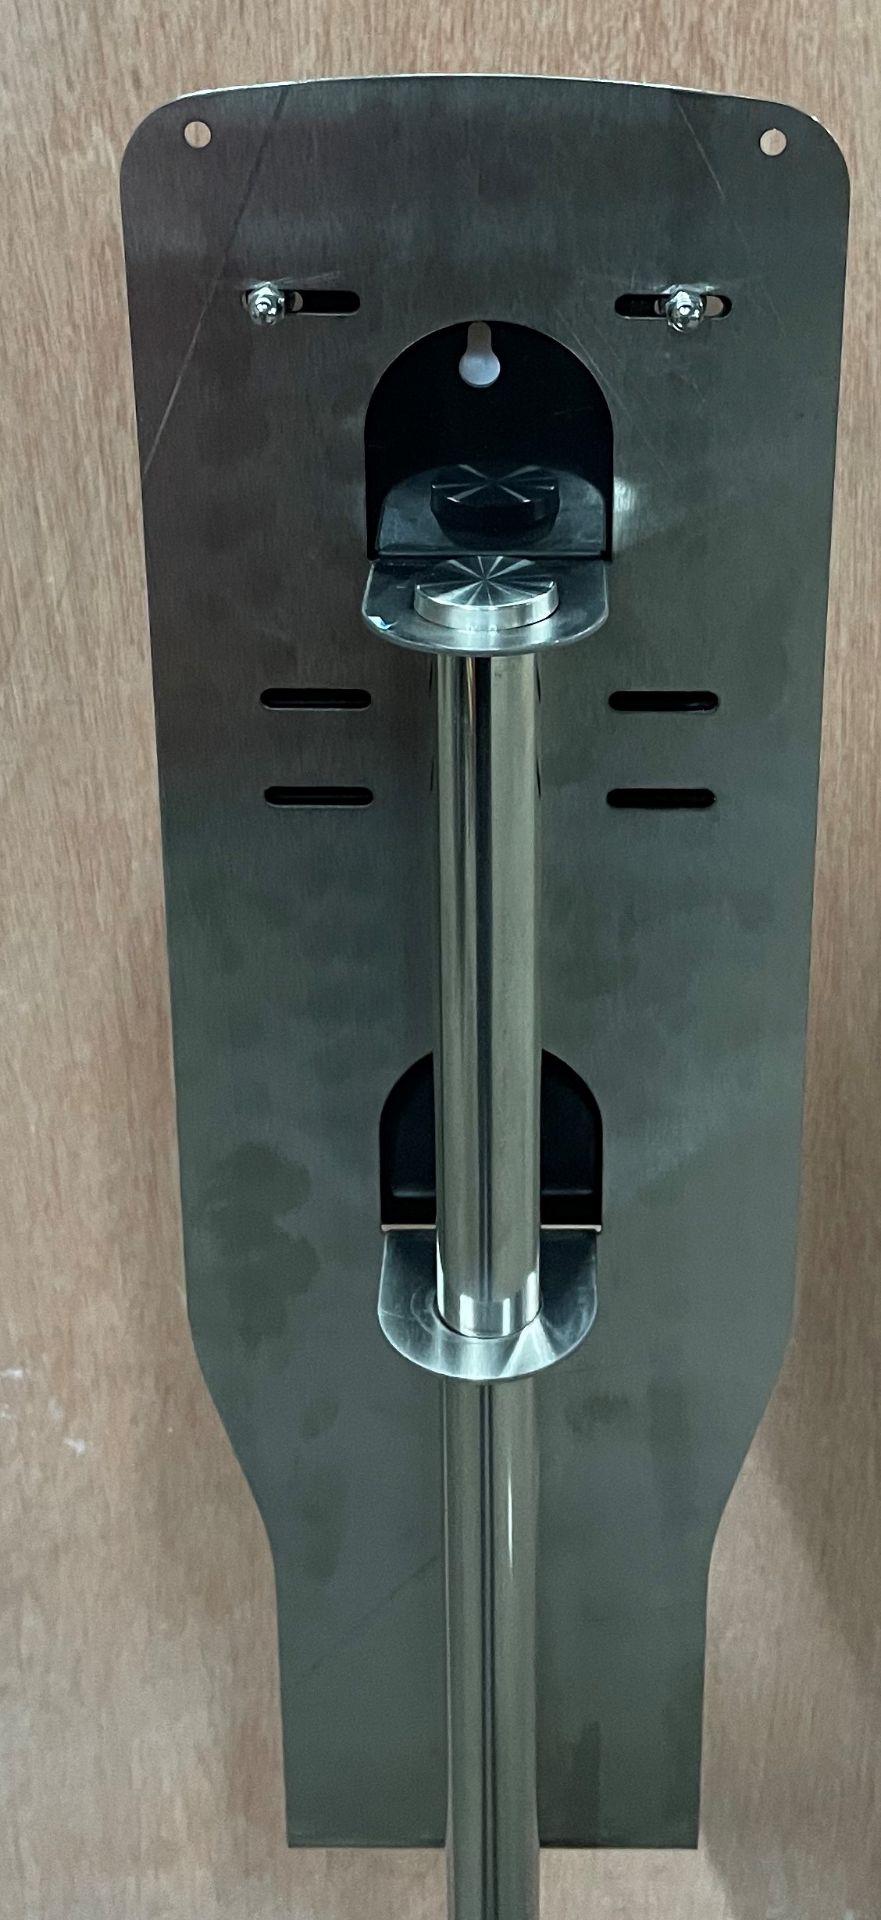 2x HCI Metal Sanitizer Stands | HCI Liquid Bottle Styled Soap Dispensers |HCI 2/4 Metal Bases - Image 15 of 16